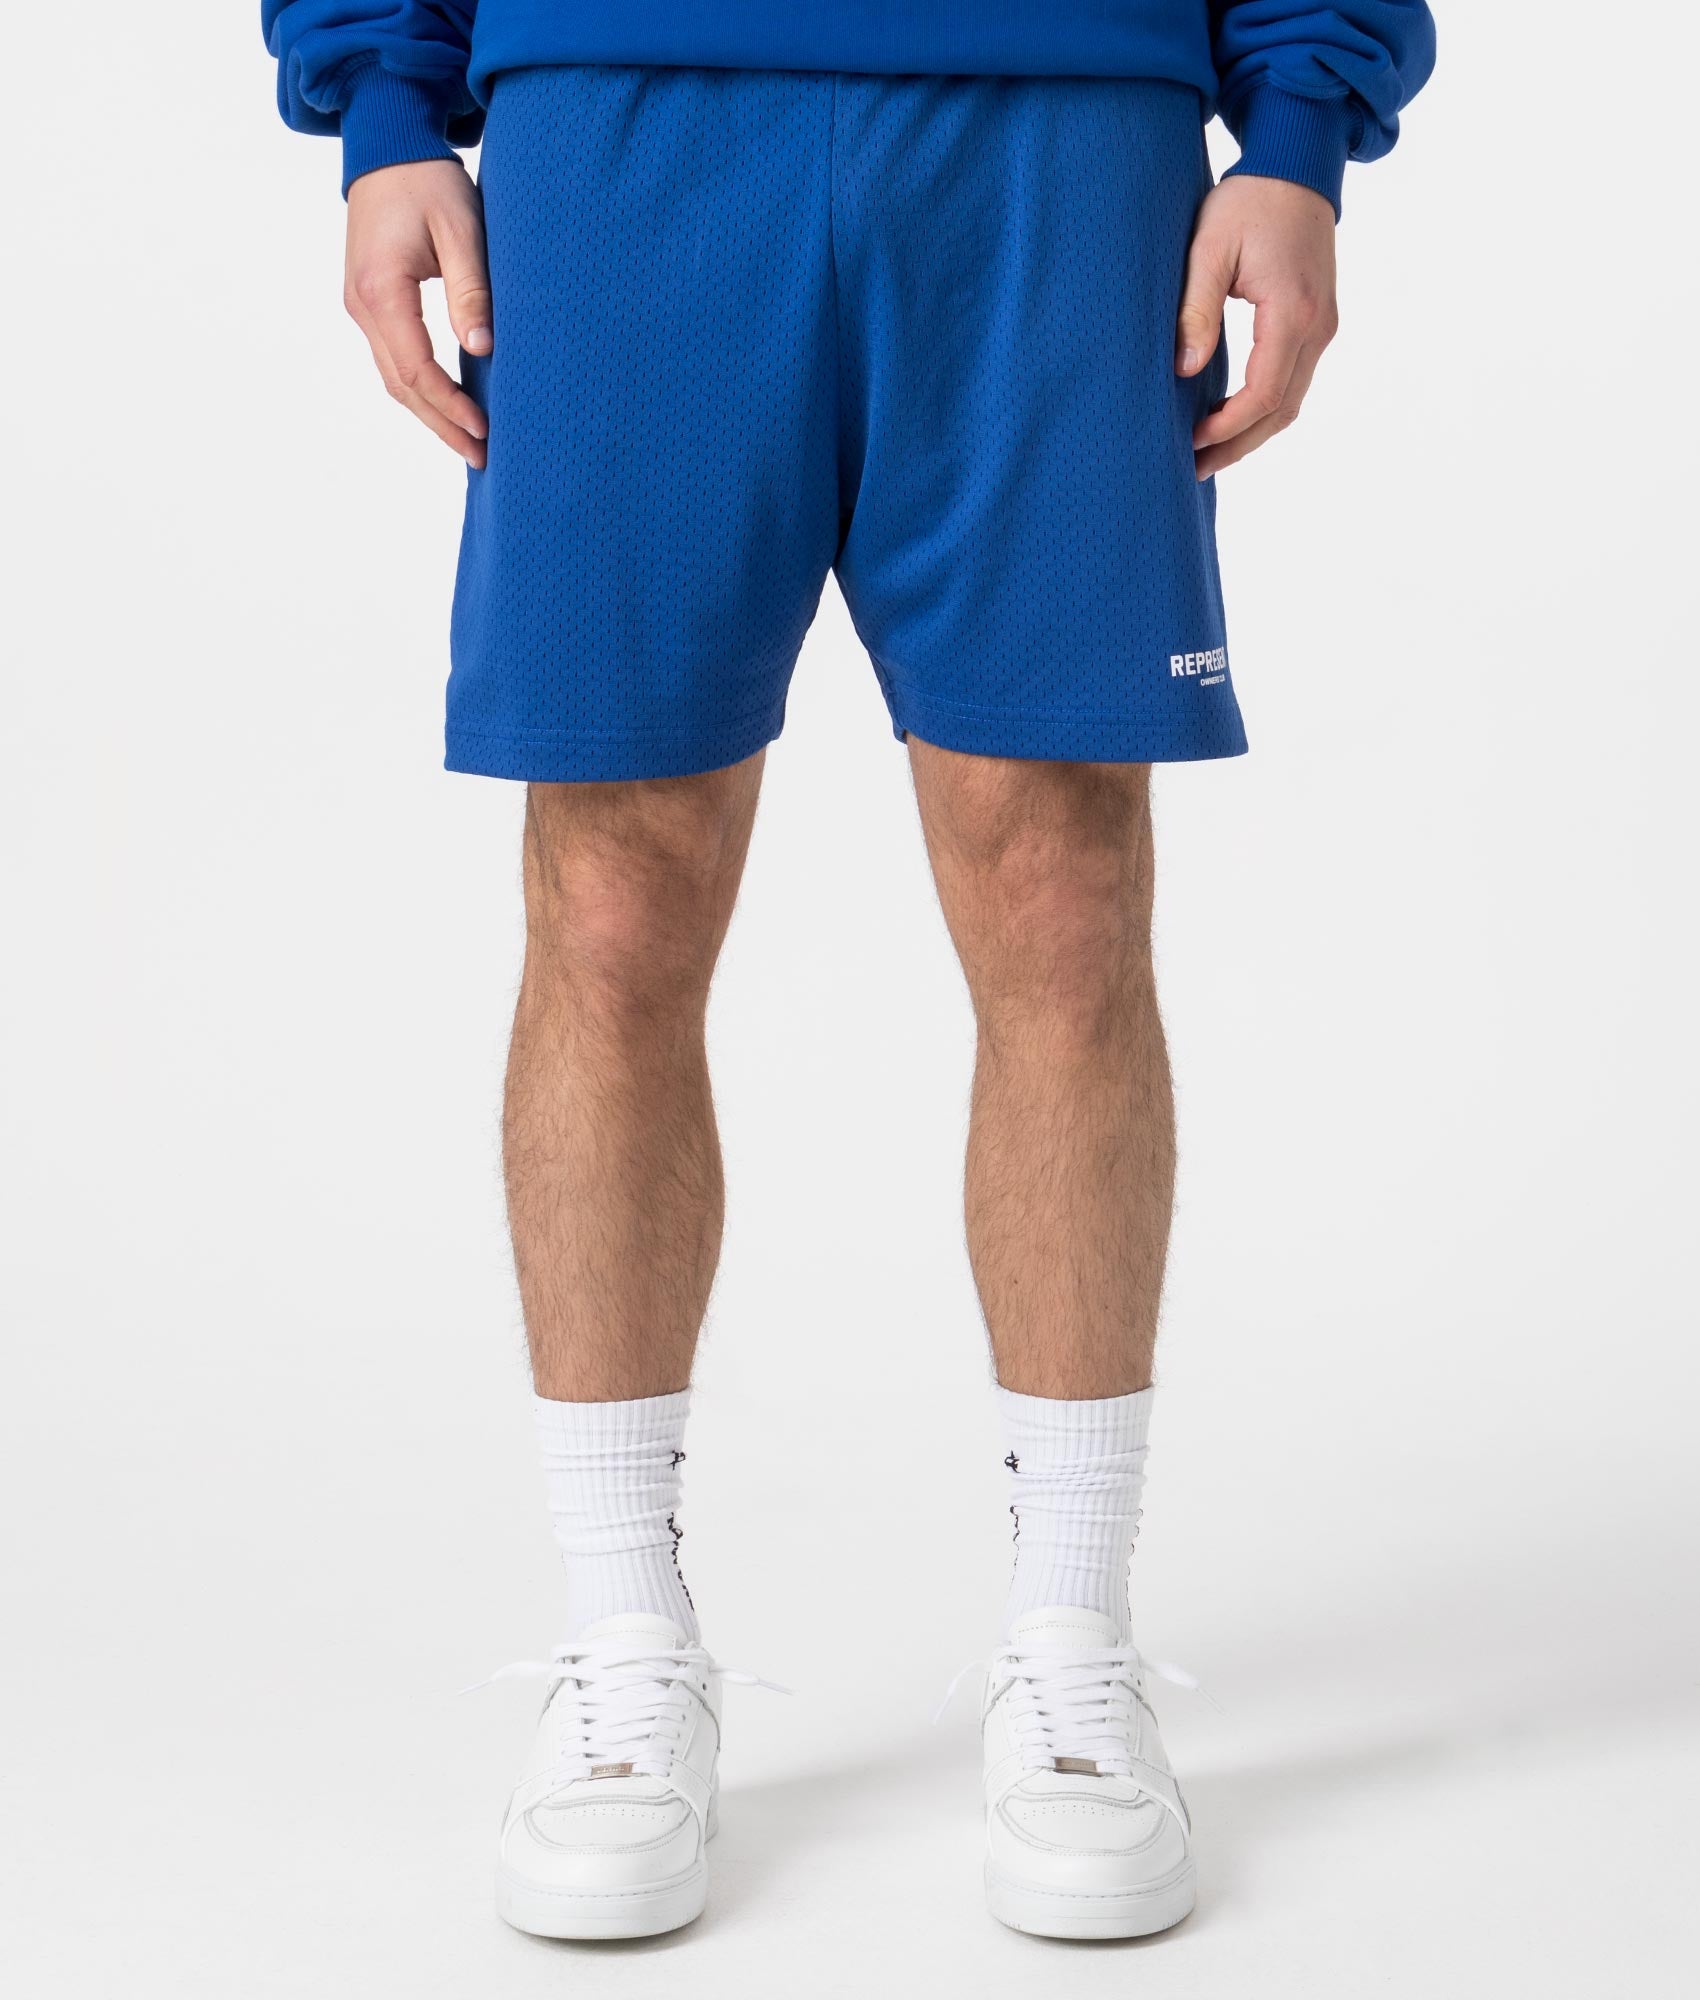 Represent Owners Club Mesh Shorts, Cobalt Shorts